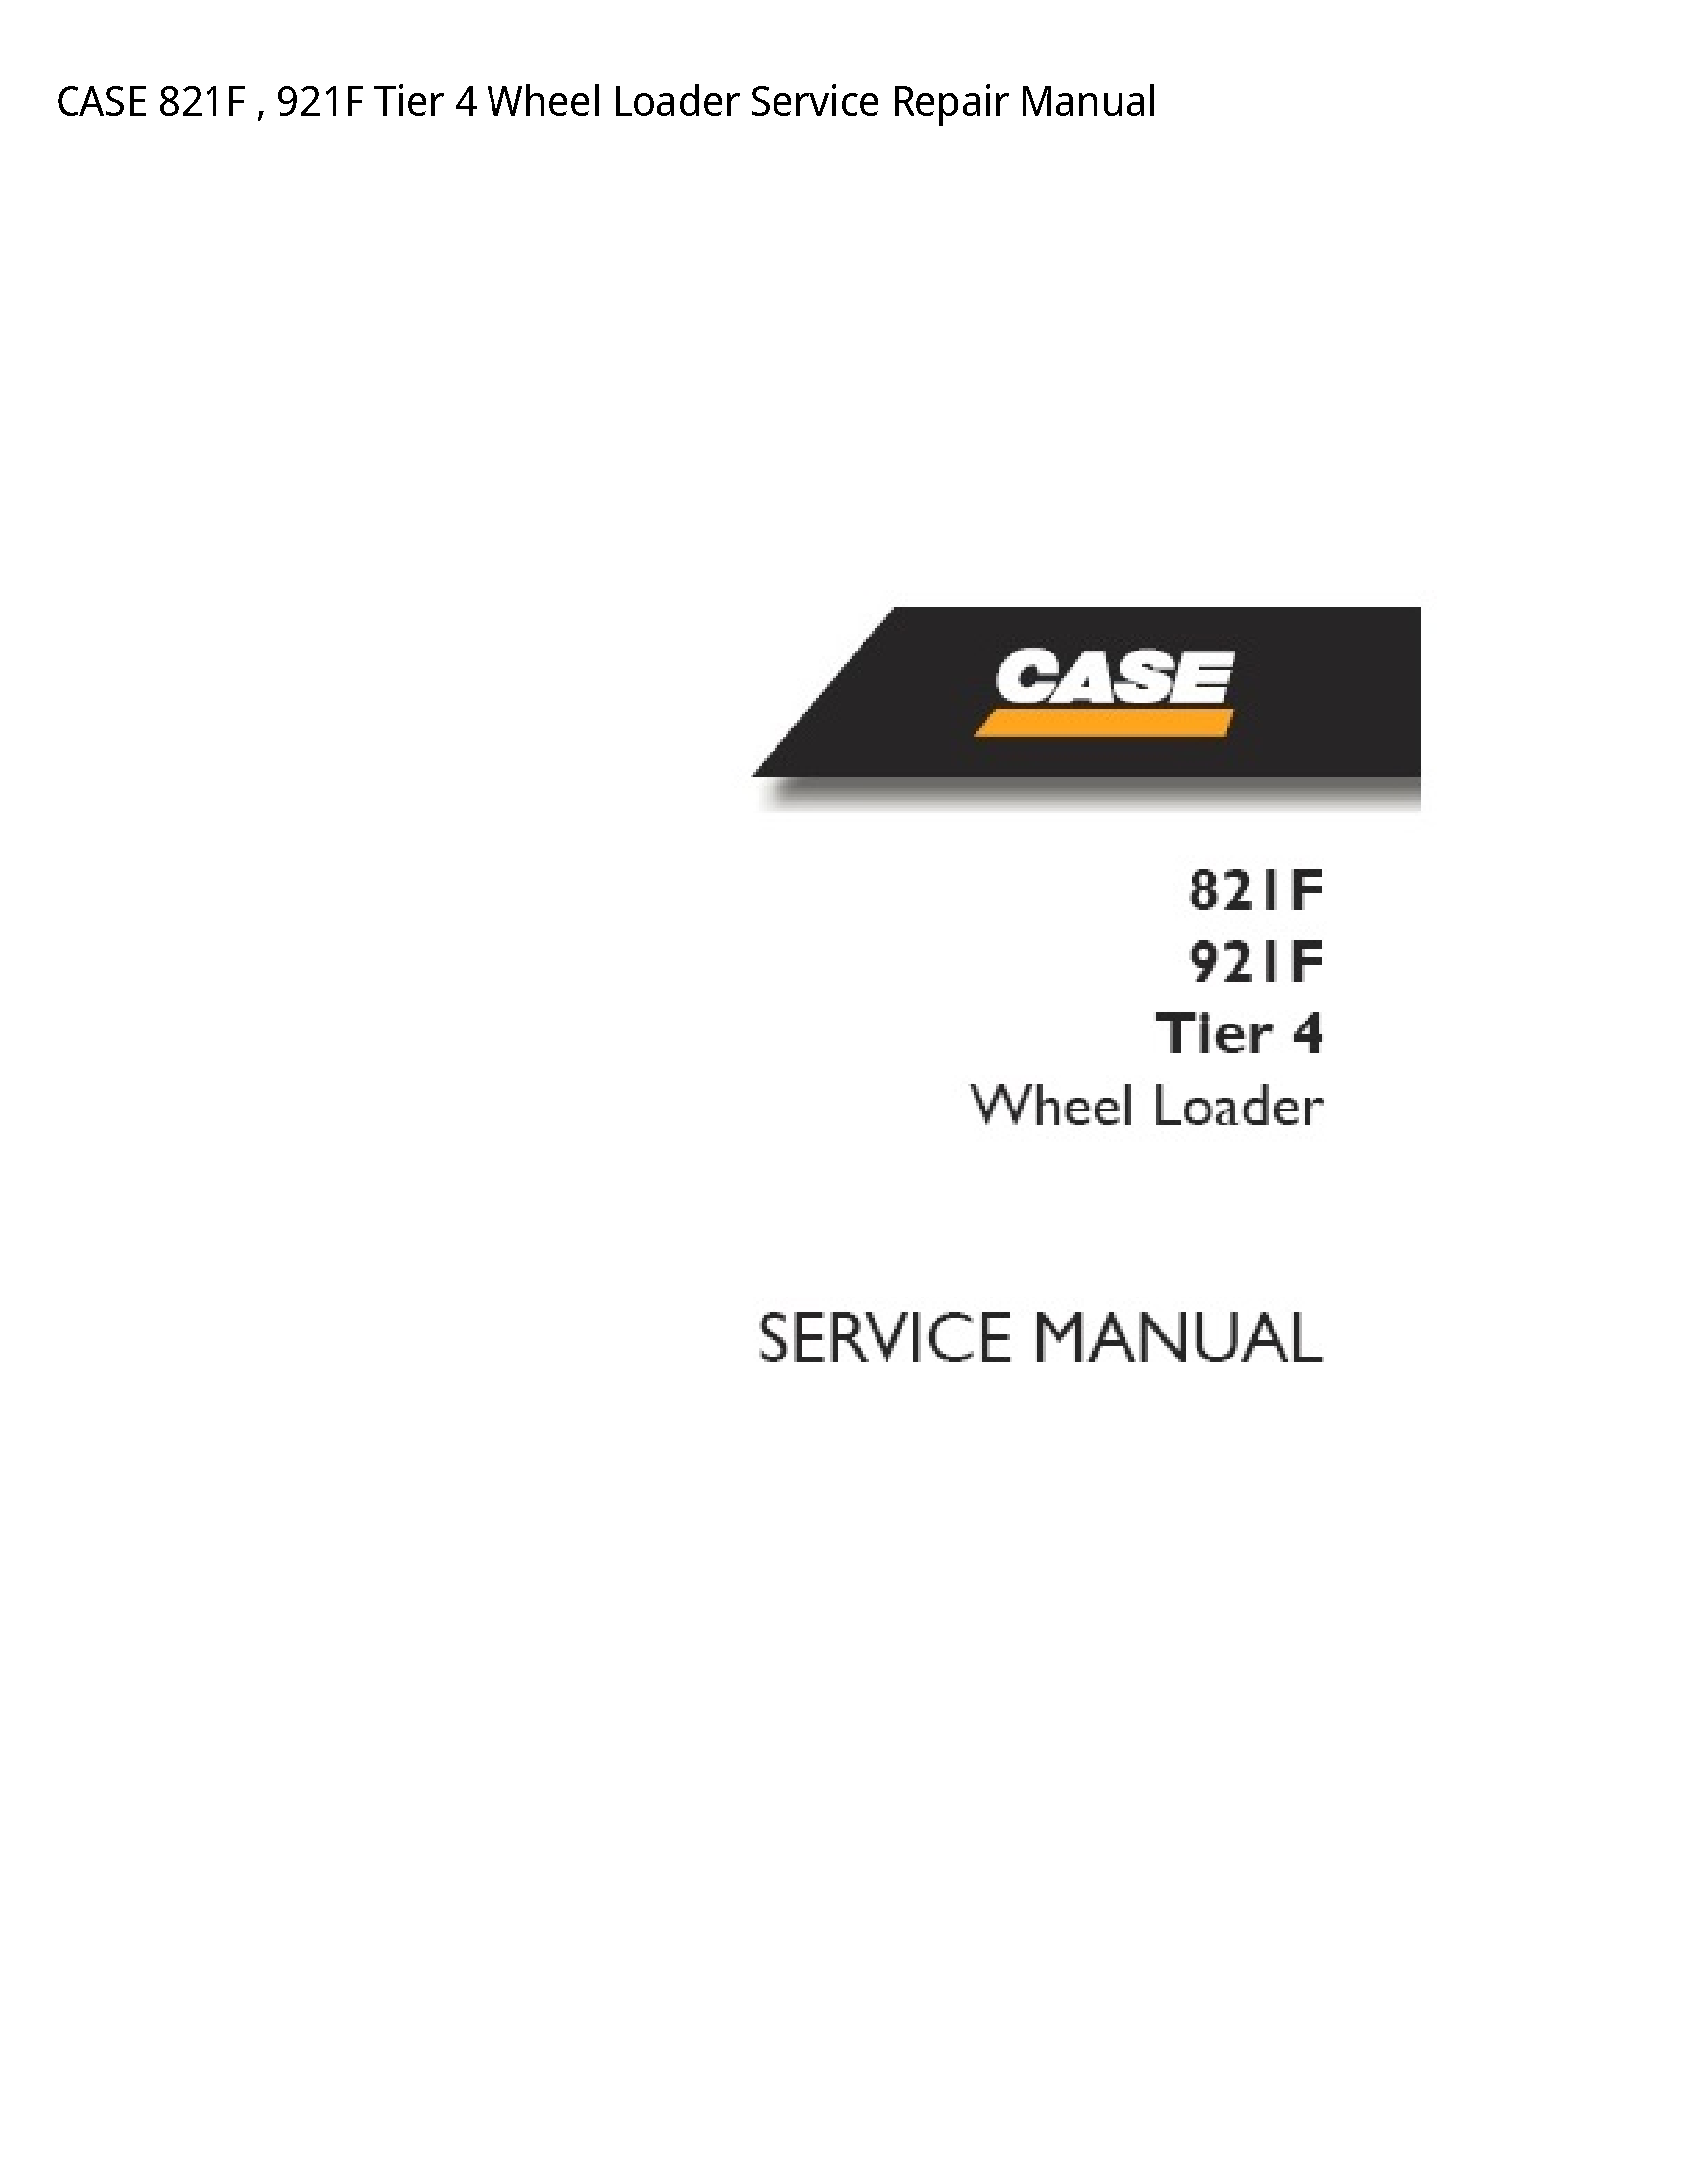 Case/Case IH 821F Tier Wheel Loader manual